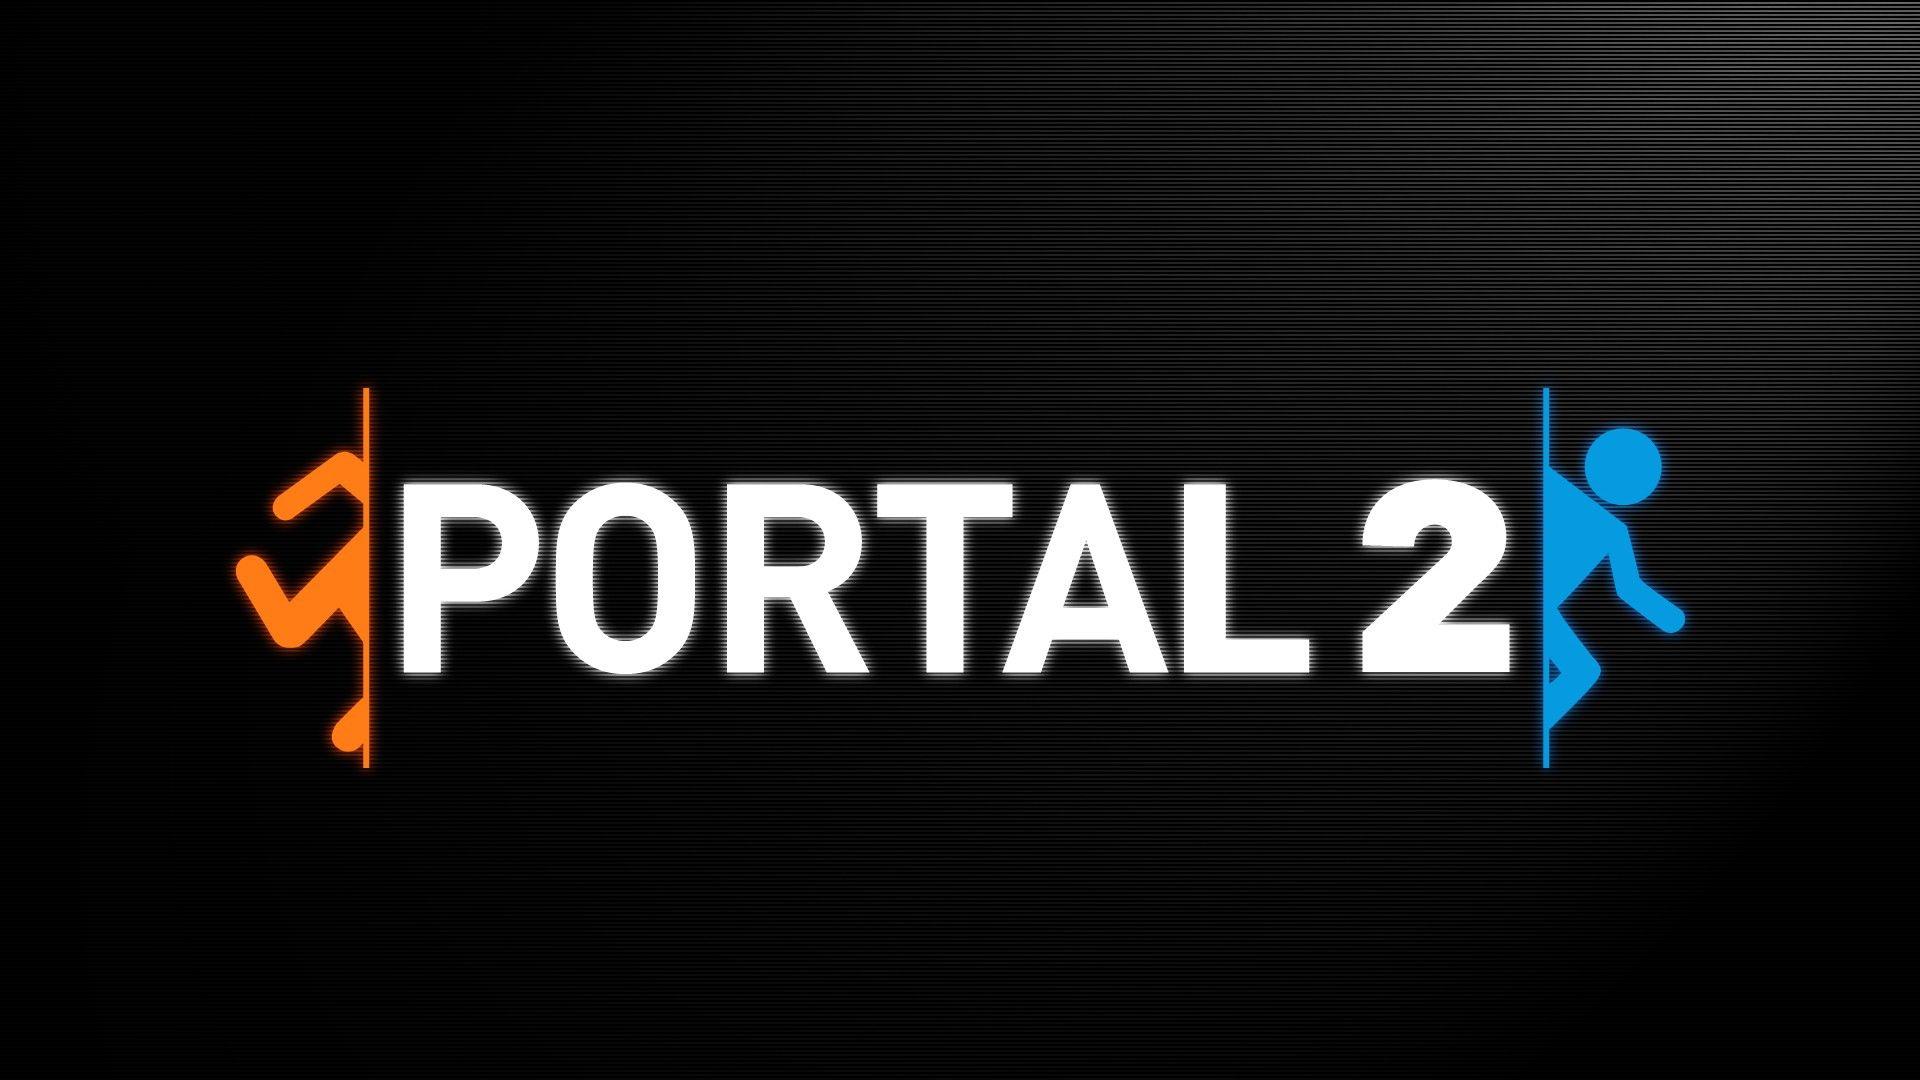 Portal Video Games, Valve, Simple, Black Background, Minimalism